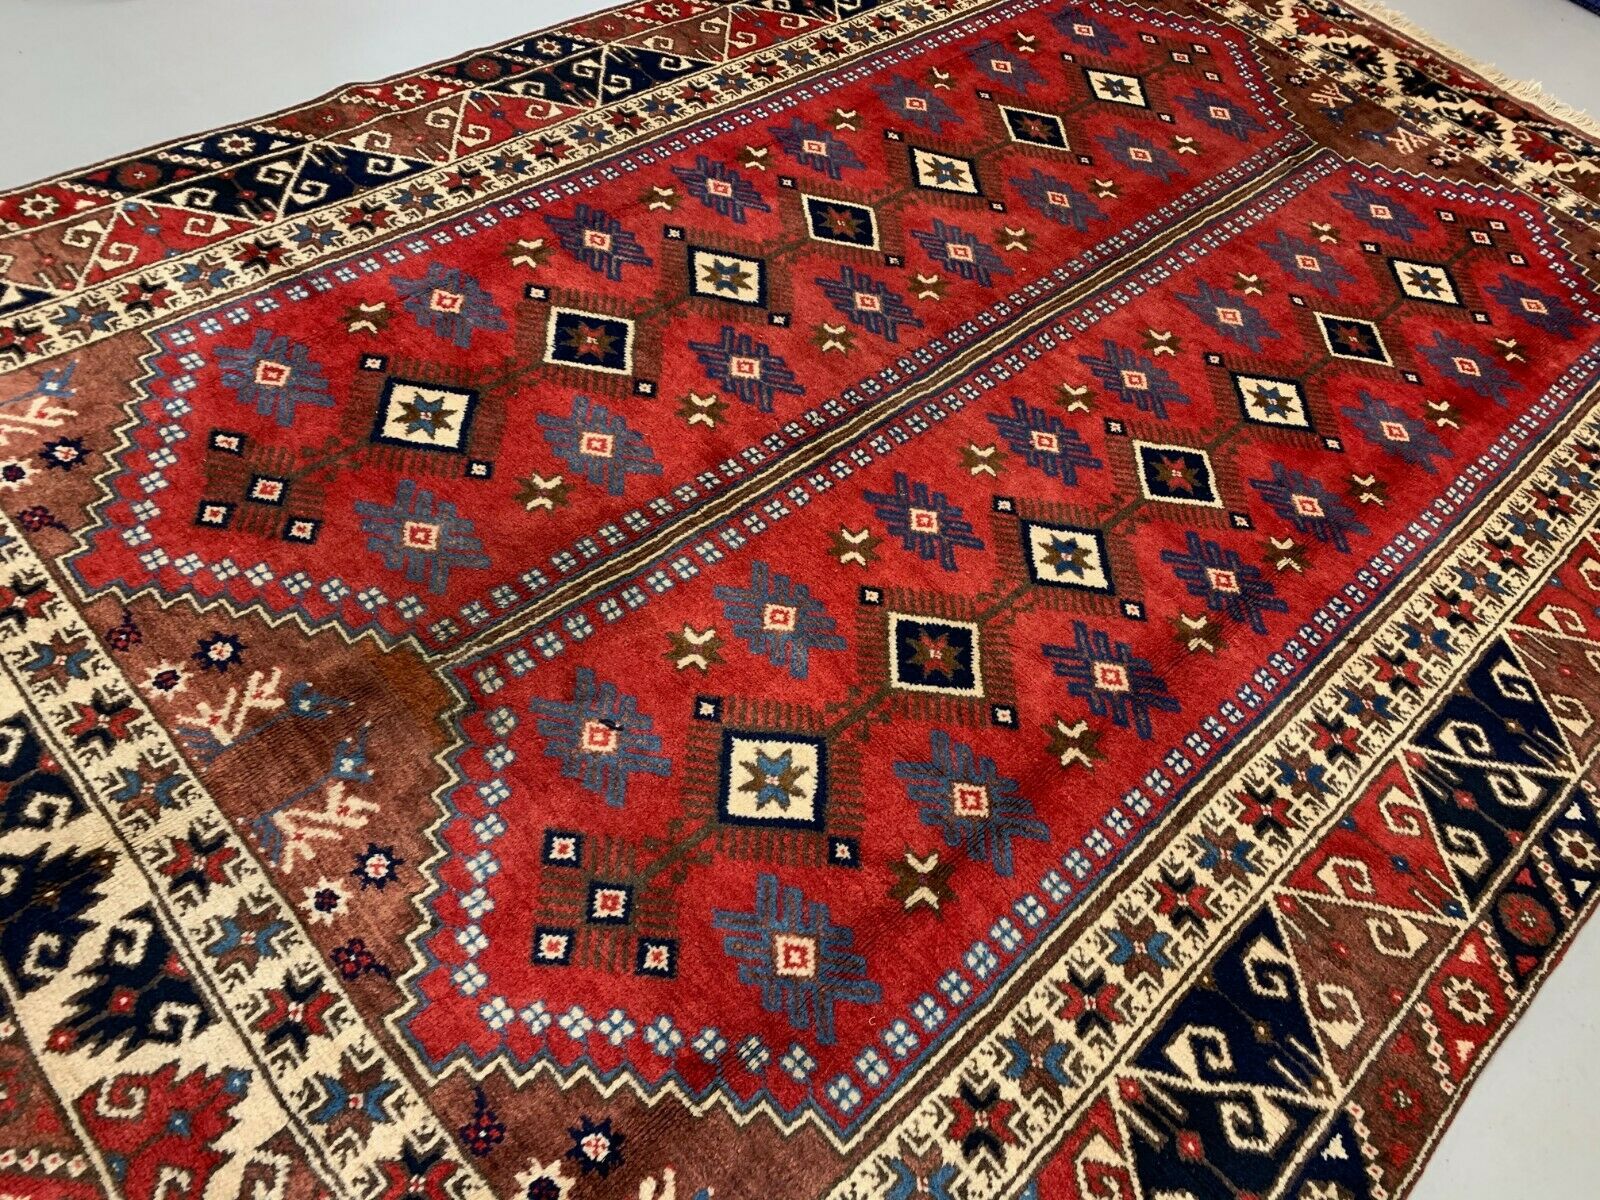 Vintage Turkish Tribal Rug 300x200 cm Turkish Carpet Red Navy Blue Beige Large